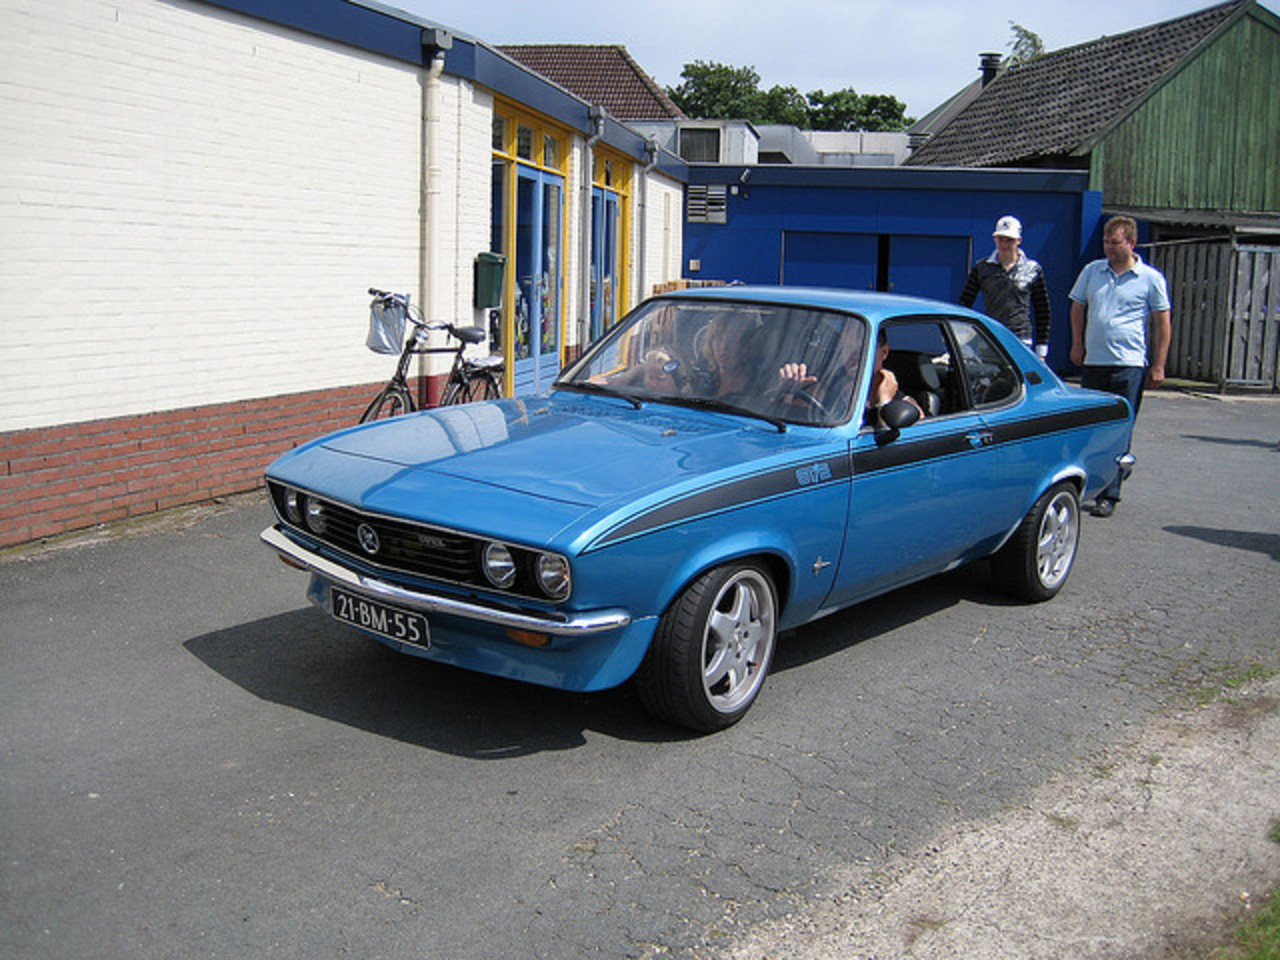 Opel Manta Automatic 1974 | Flickr - Photo Sharing!